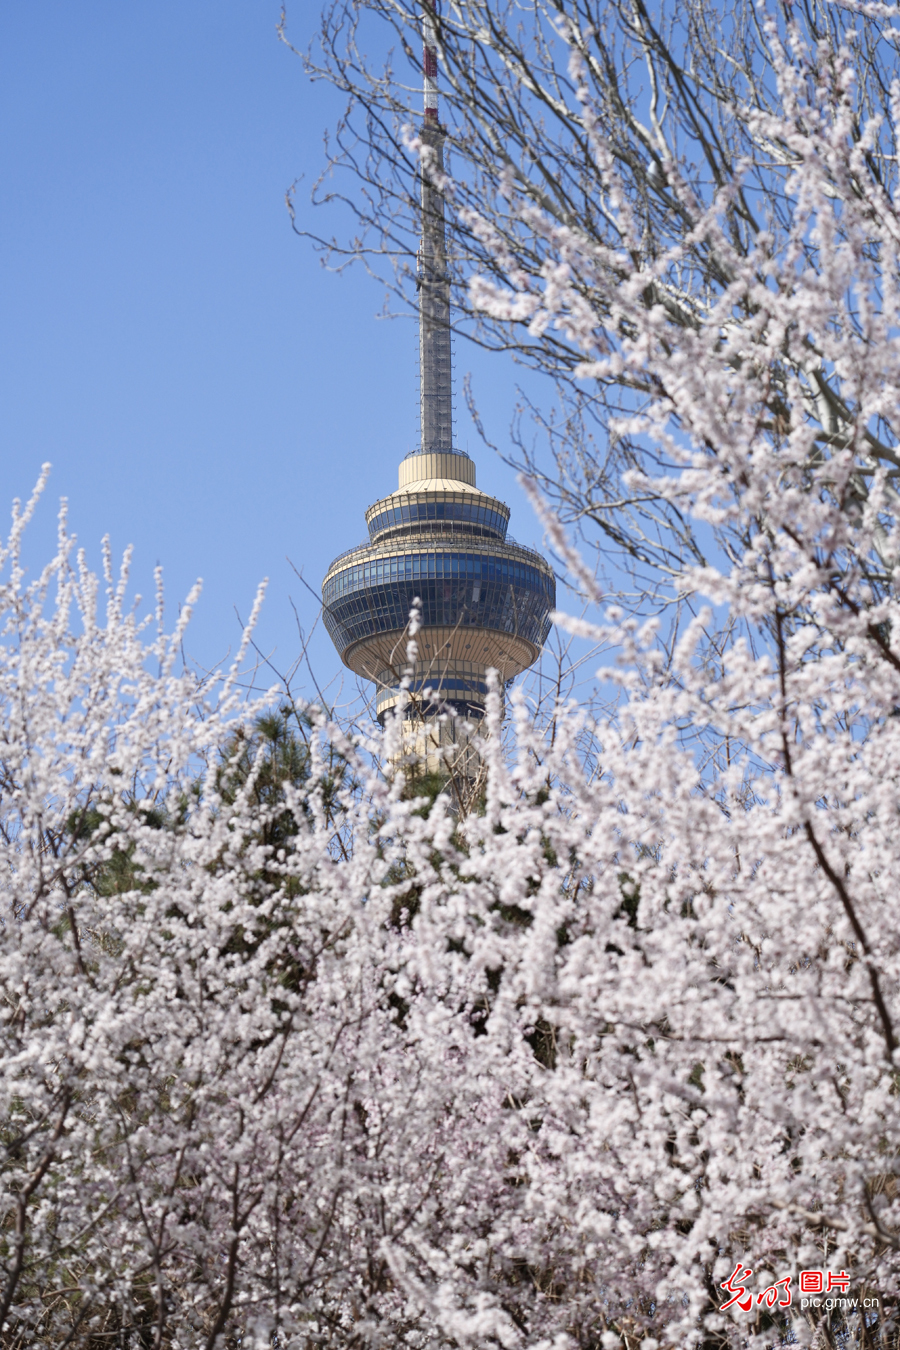 Cherry blossoms bloom at Beijing's Yuyuantan Park